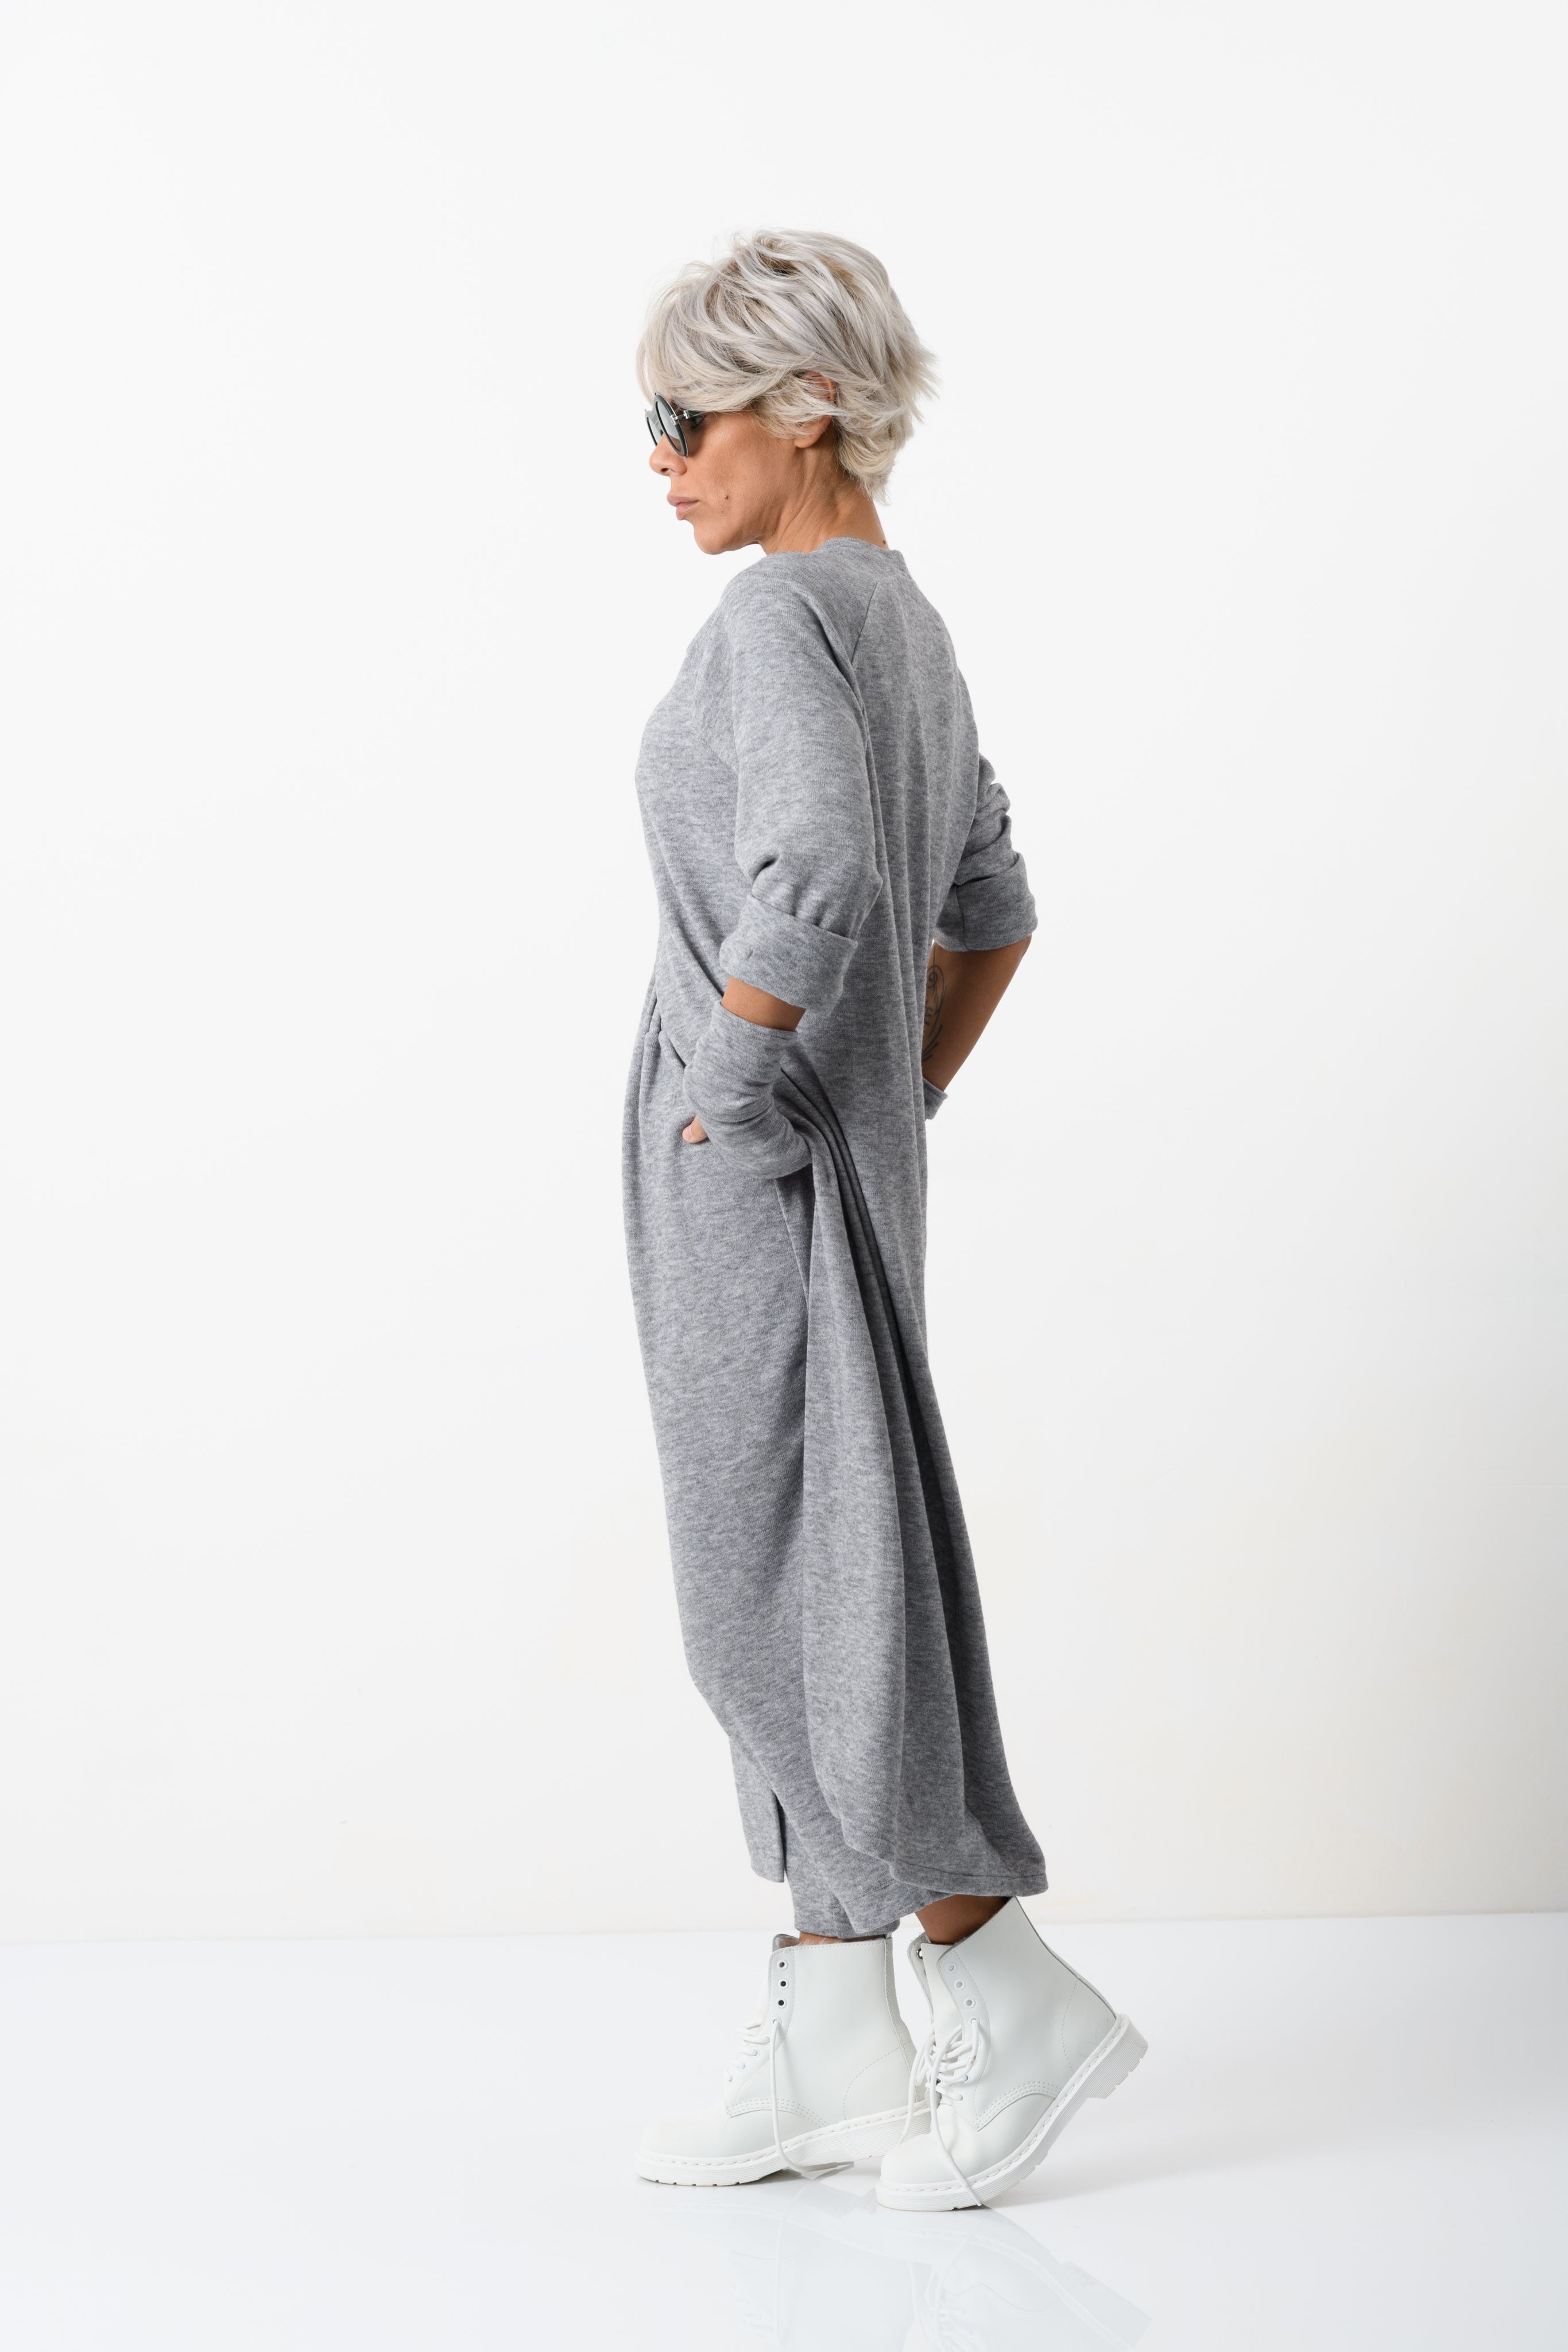 Three Pieces Grey Woman Casual Set – Clothes By Locker Room